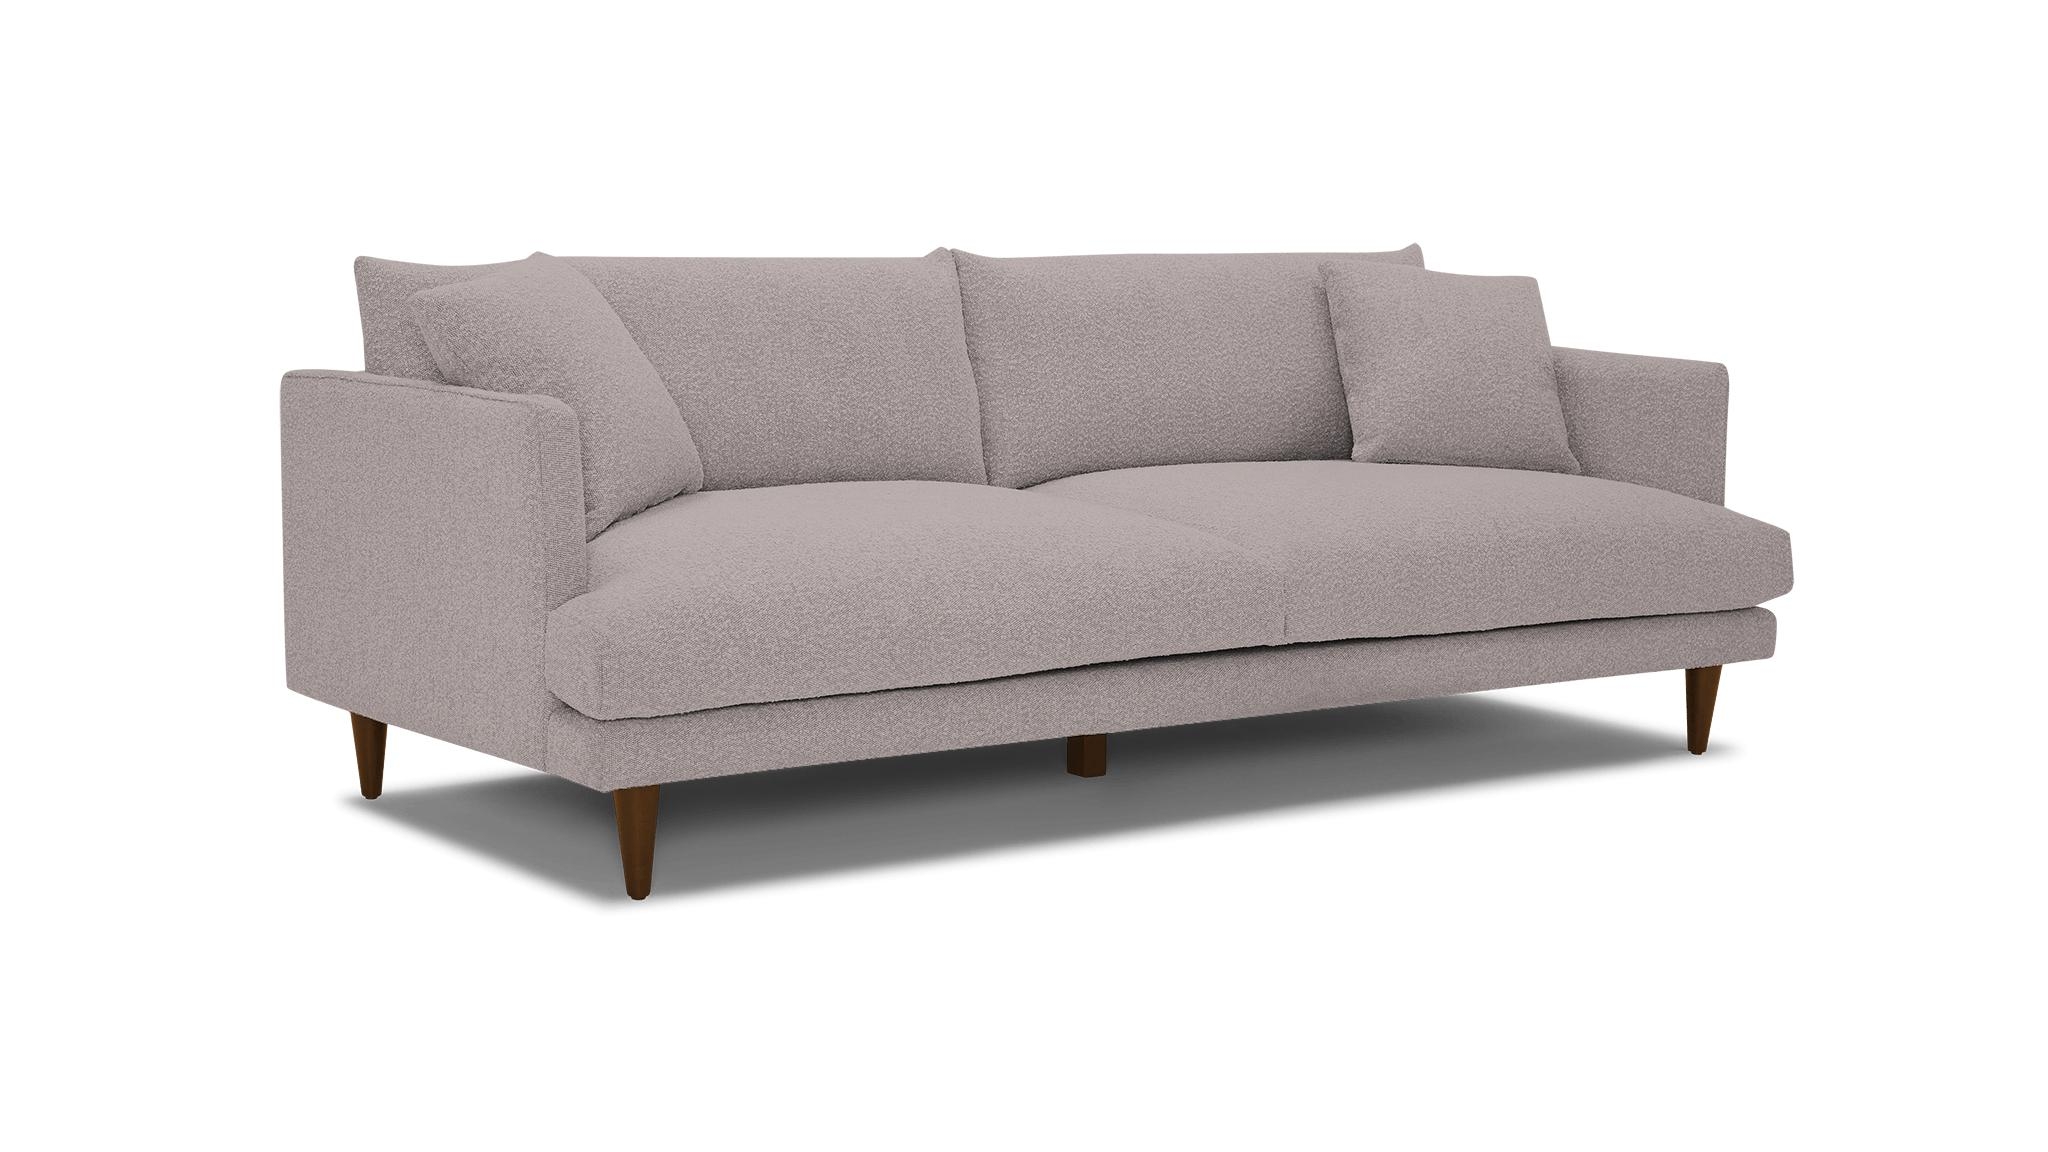 Purple Lewis Mid Century Modern Grand Sofa - Sunbrella Premier Wisteria - Mocha - Image 1